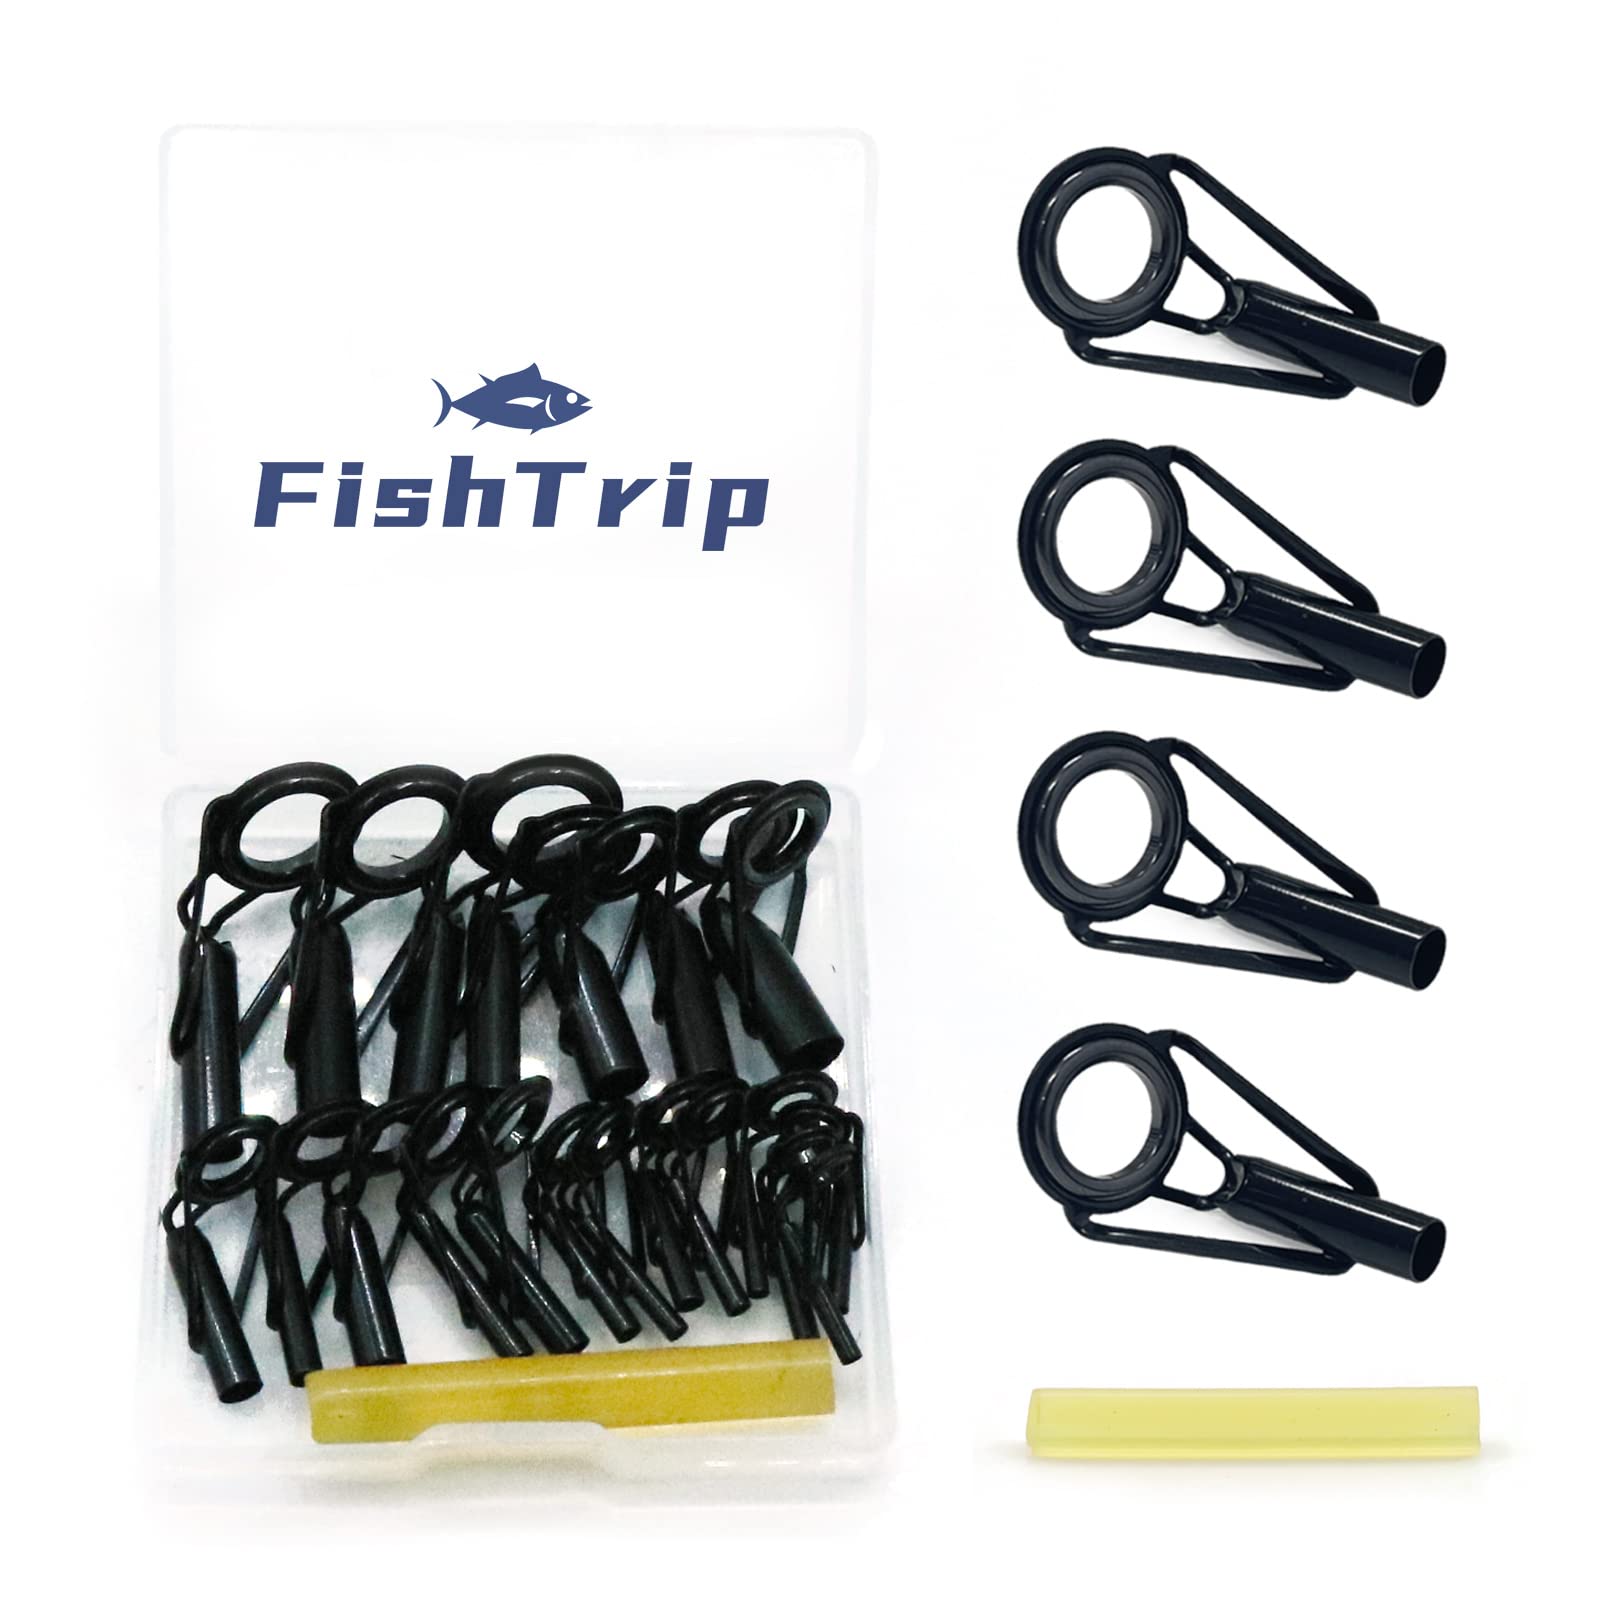 Fishing Rod Repair Kit Complete with Epoxy,10pcs Carbon Fiber